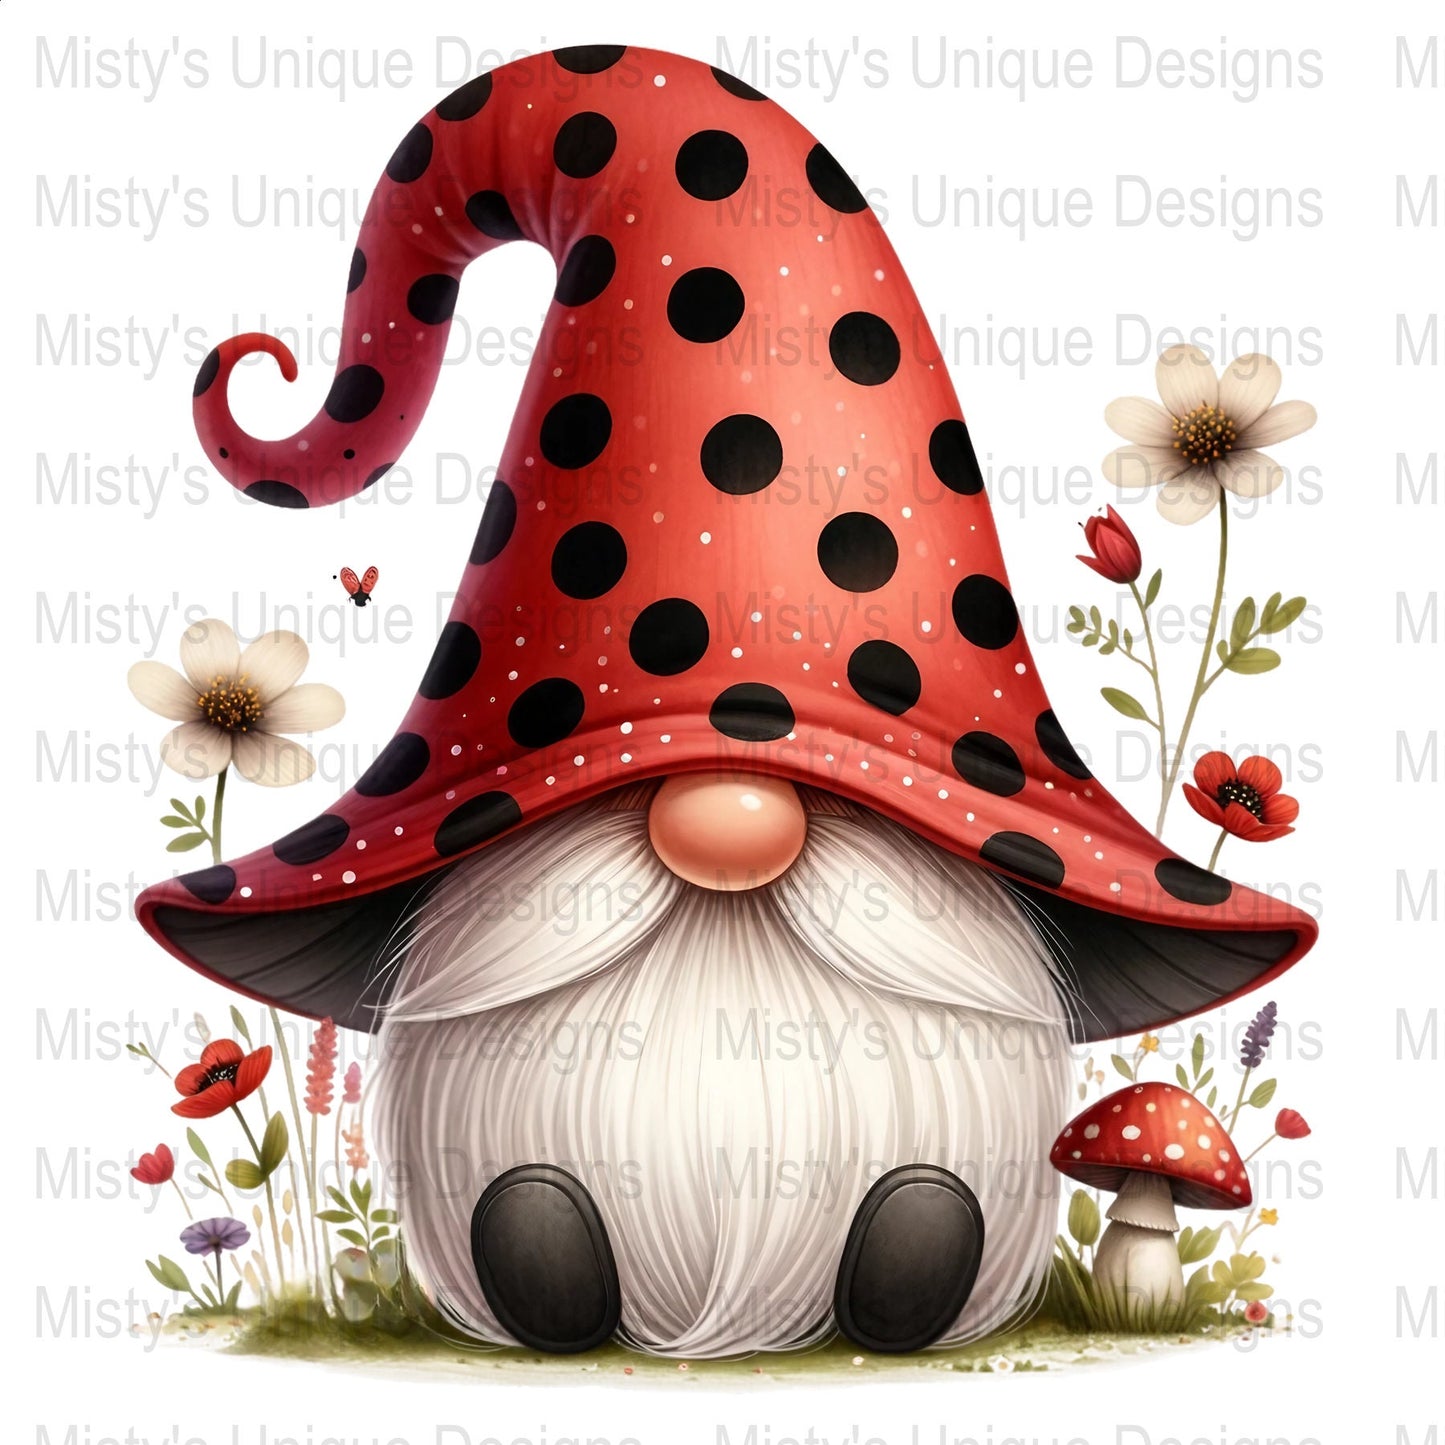 Cute Gnome Clipart, Red Polka Dot Hat, Digital Download, Fantasy Graphics, PNG Image, Scrapbooking, Crafting, Printable Art